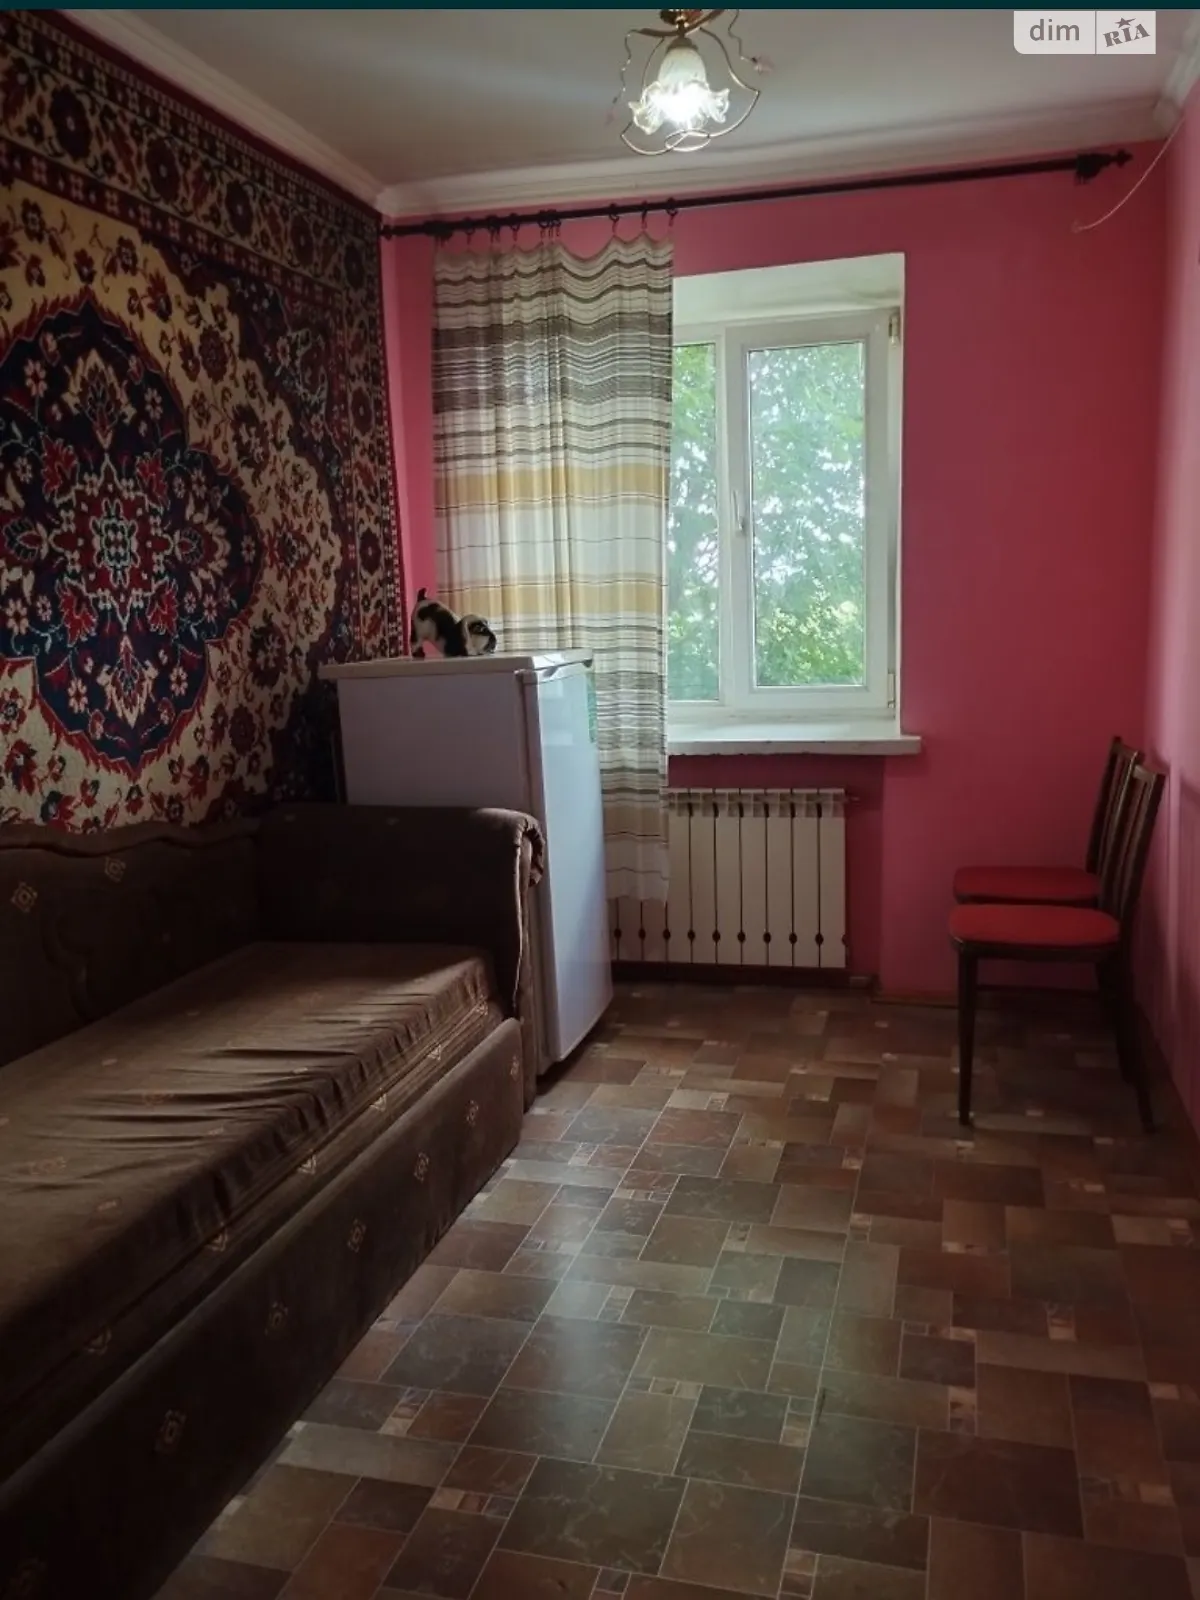 Продается комната 30 кв. м в Харькове - фото 4